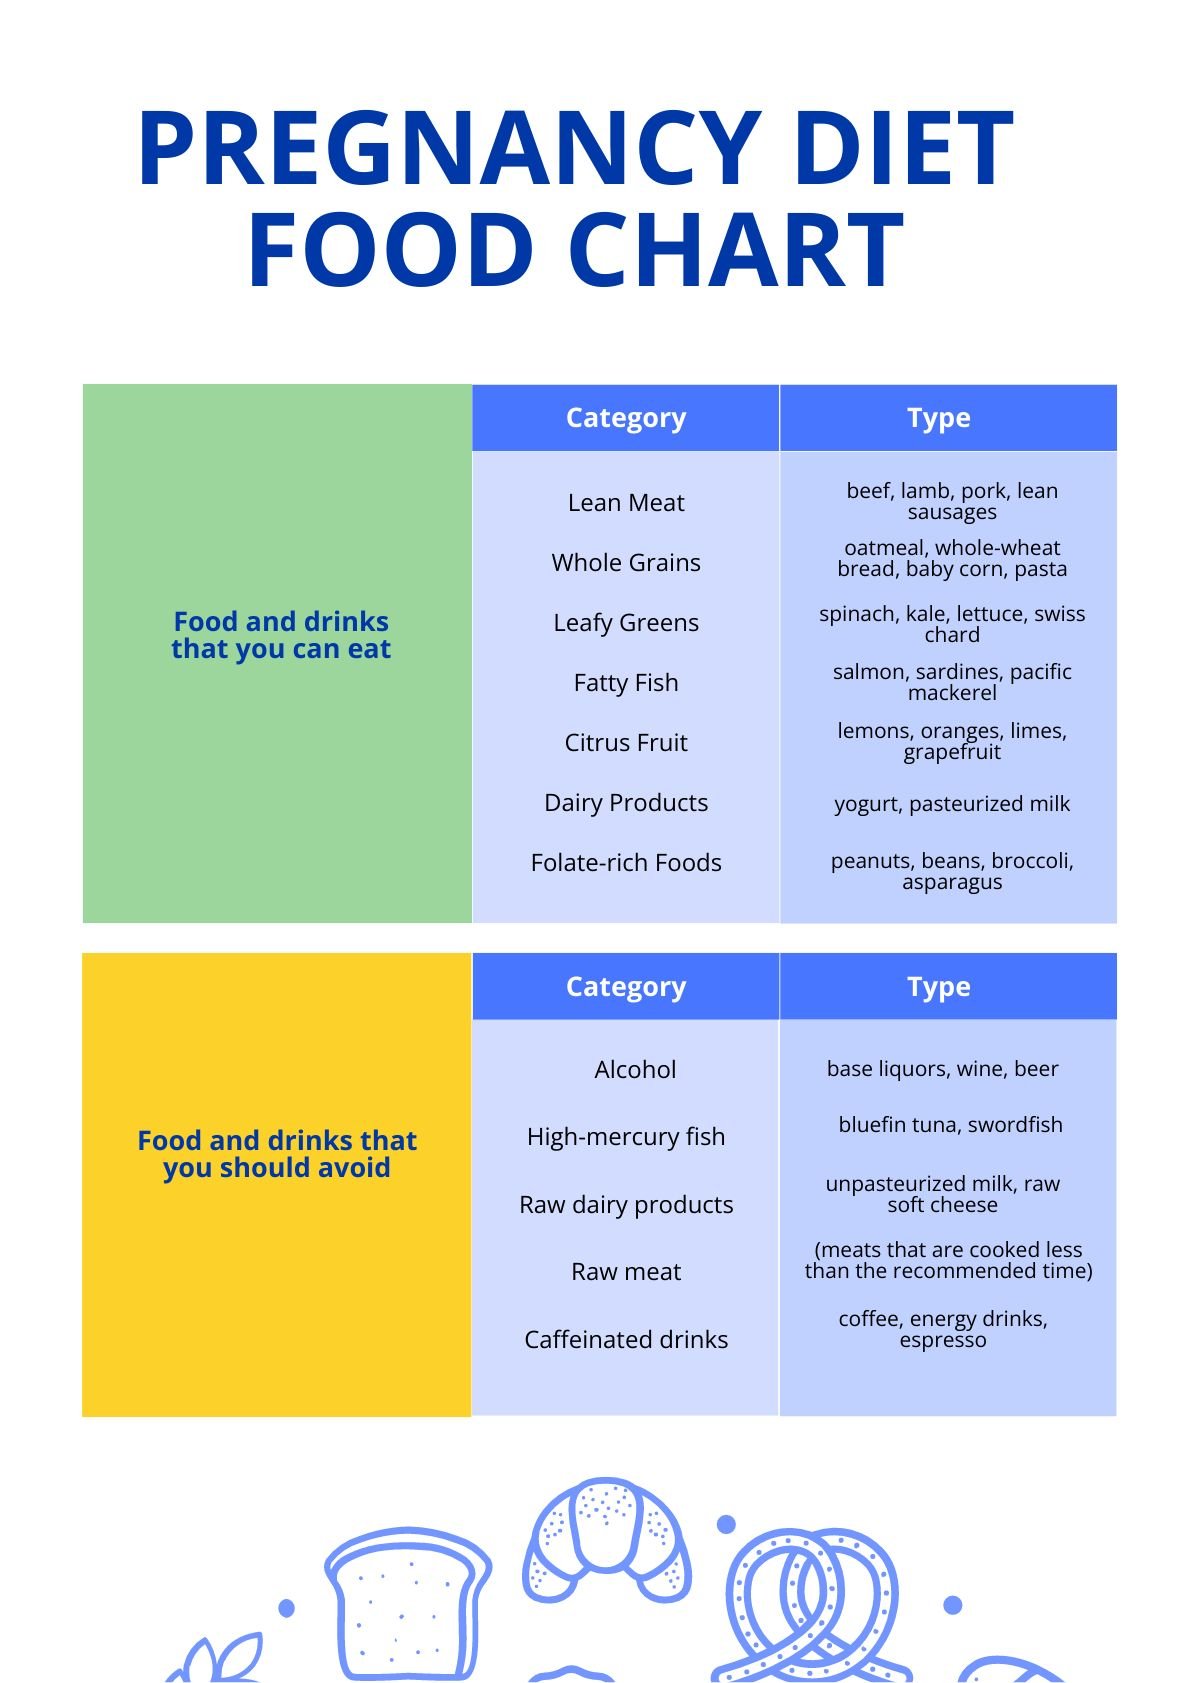 https://images.template.net/103596/pregnancy-diet-food-chart-1kfgv.jpeg